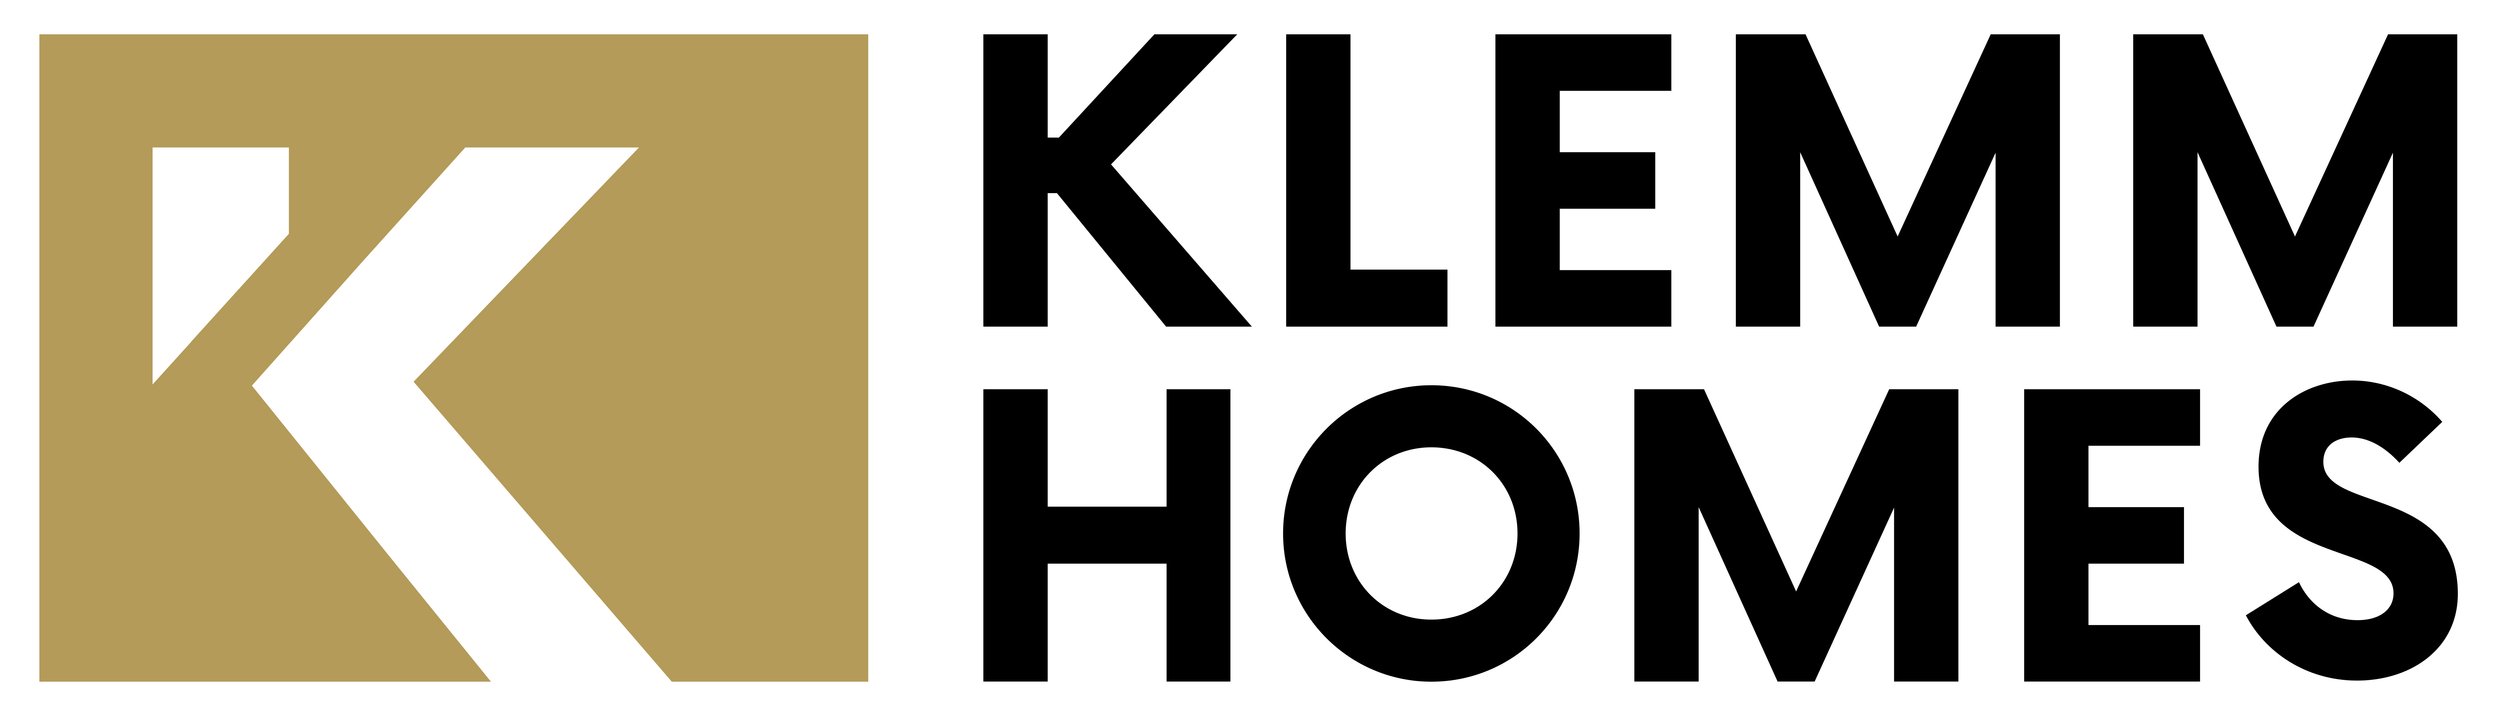 Klemm Homes Horizontal Logo Black.jpg